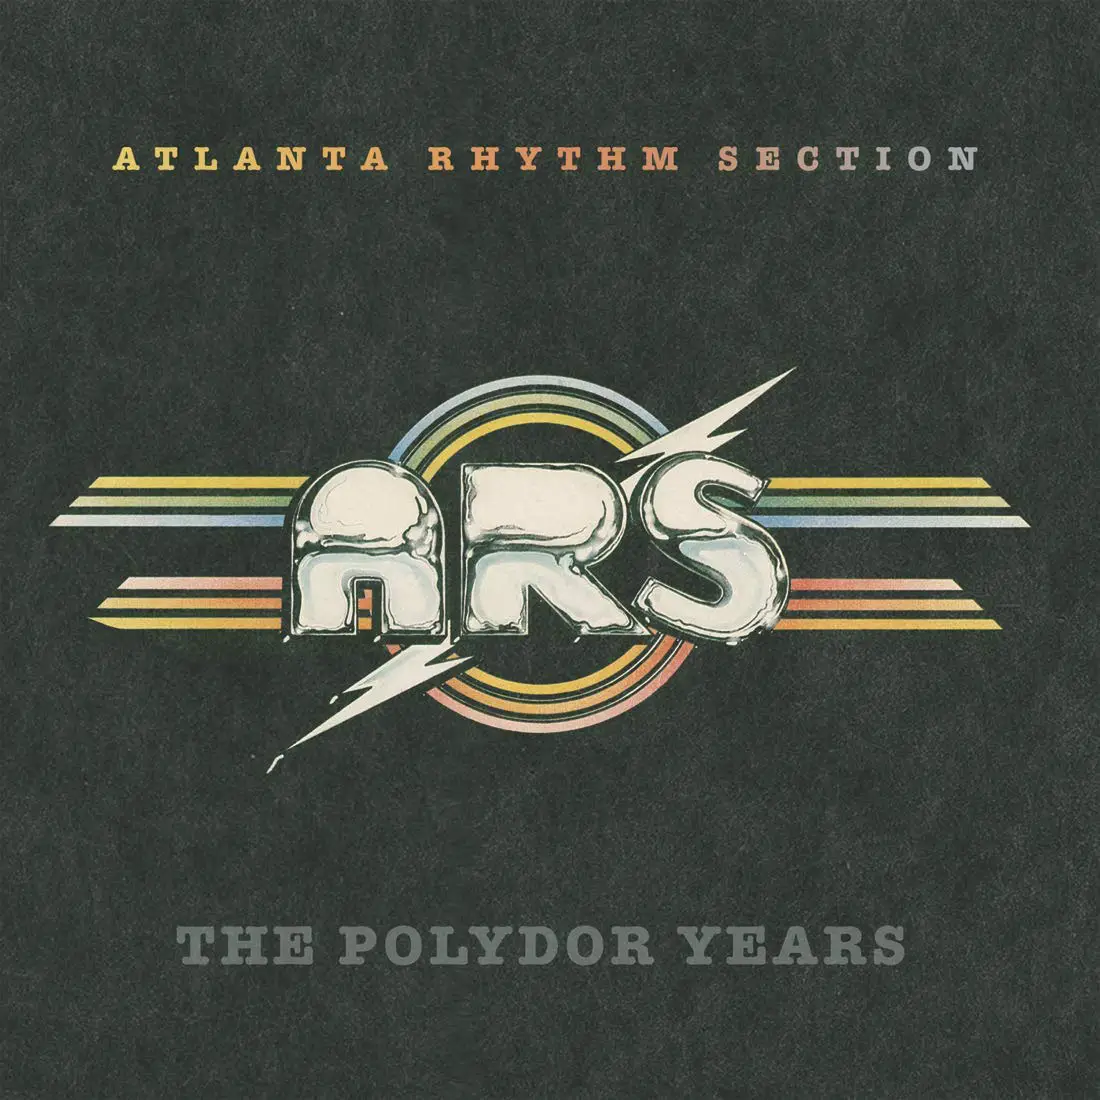 Atlanta Rhythm Section - The Polydor Years (2019) [8CD Box Set] / AvaxHome1100 x 1100